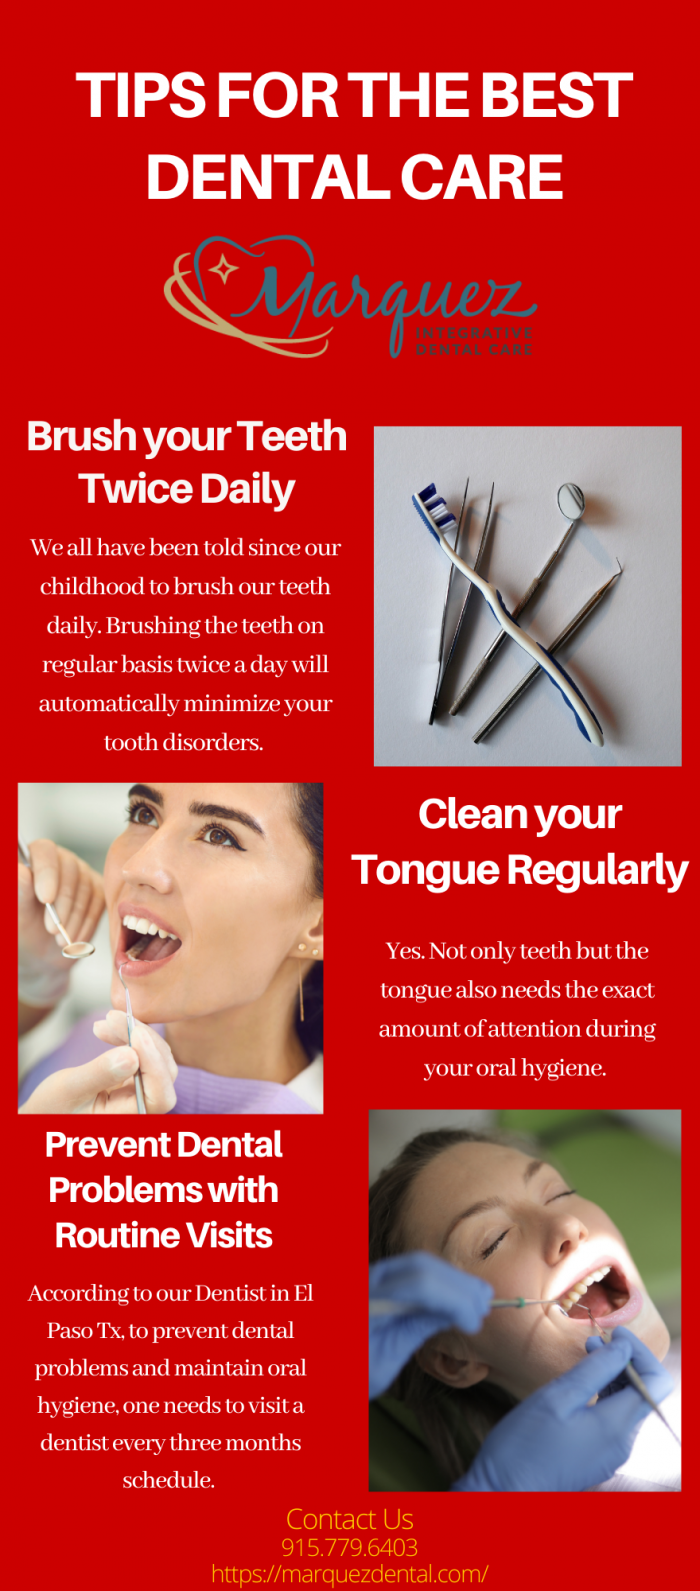 Tips For the Best Dental Care